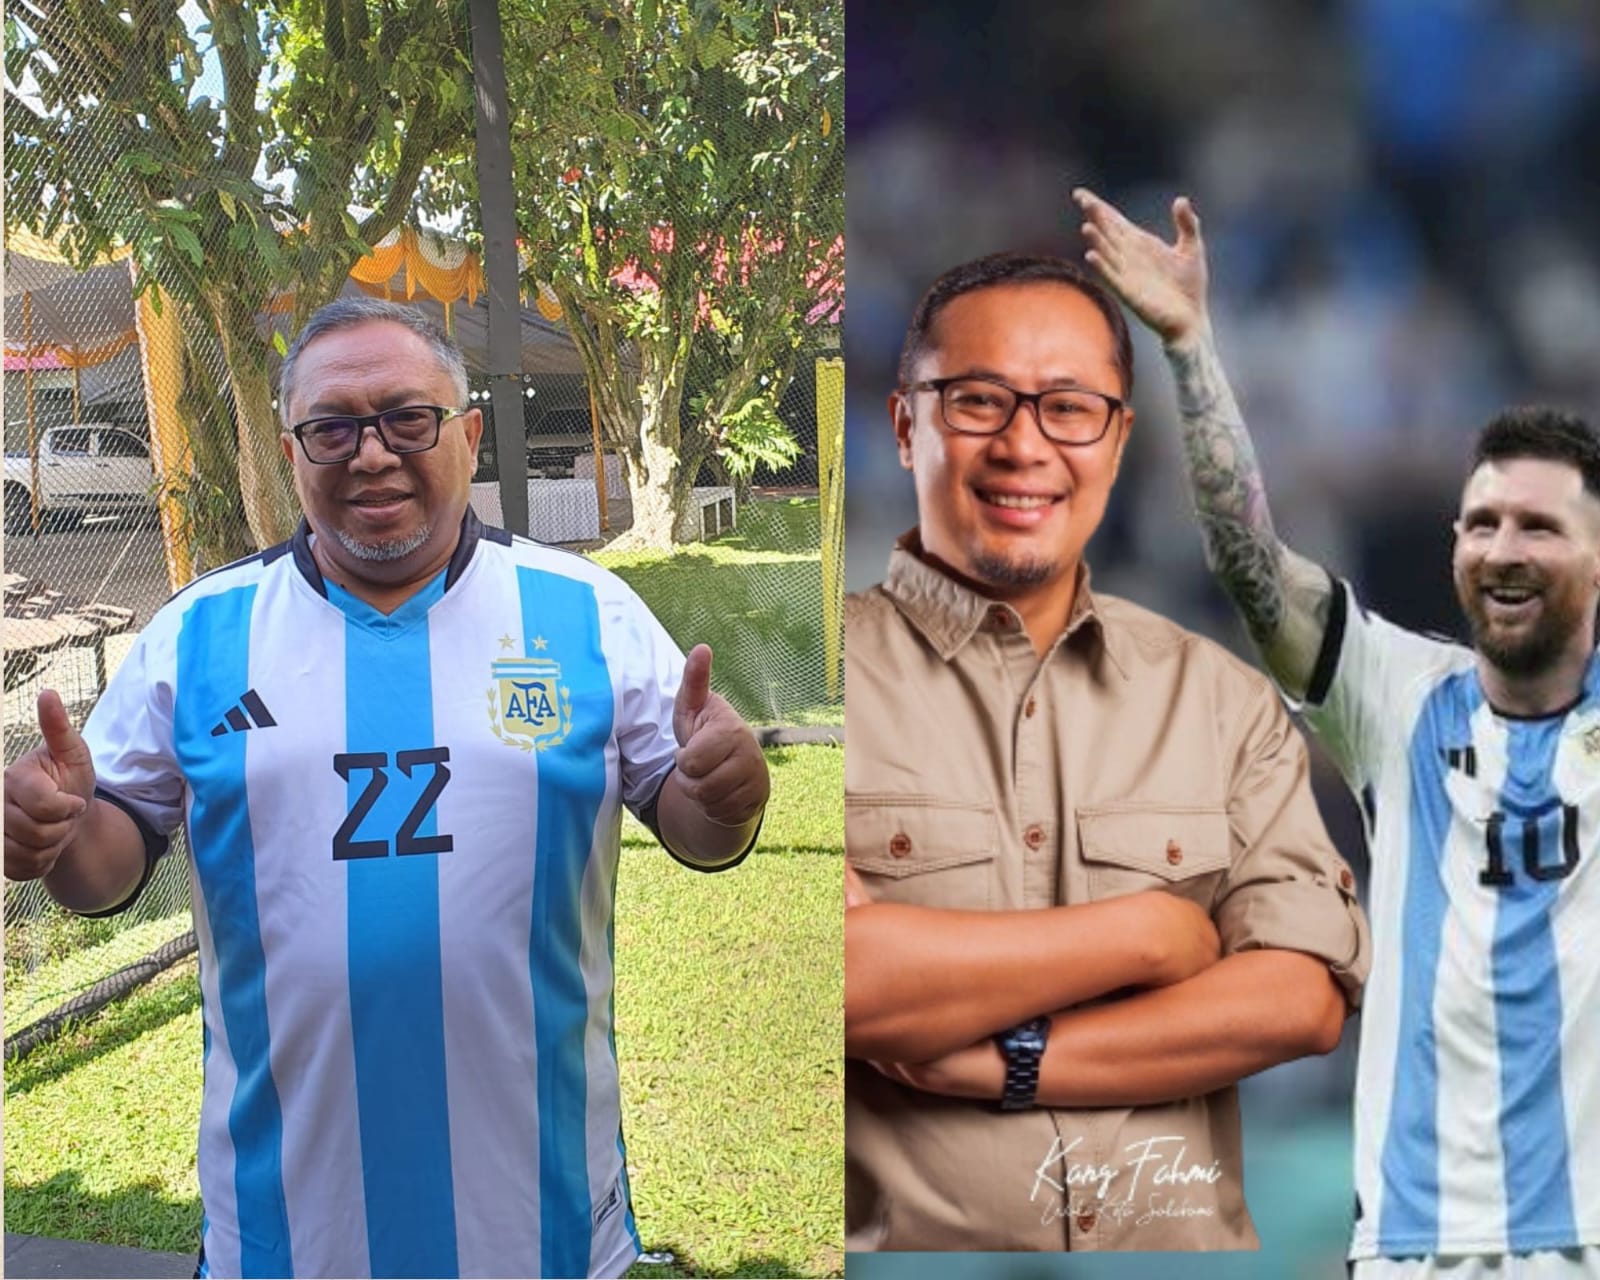 Bupati Sukabumi dan Walikota Sukabumi Kompak mendukung Timnas Argentina.